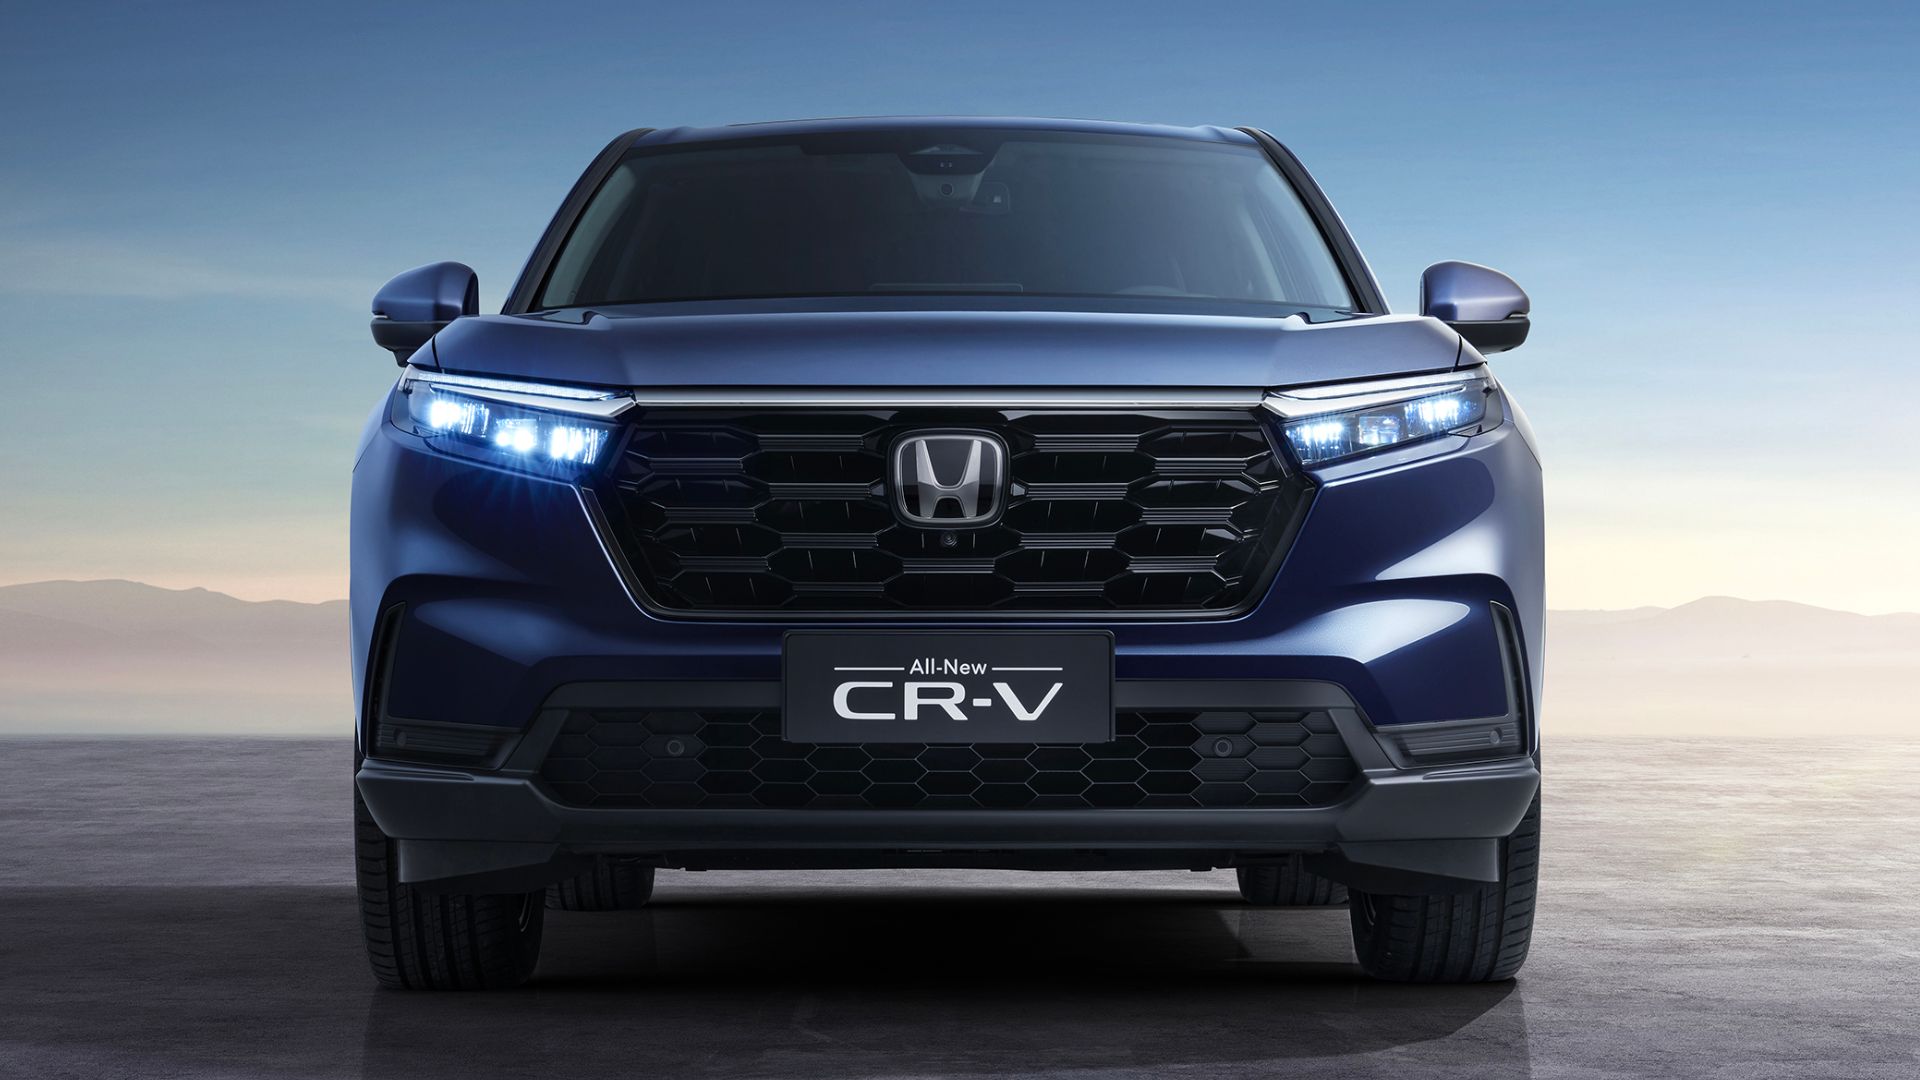 All-new Honda CR-V front view